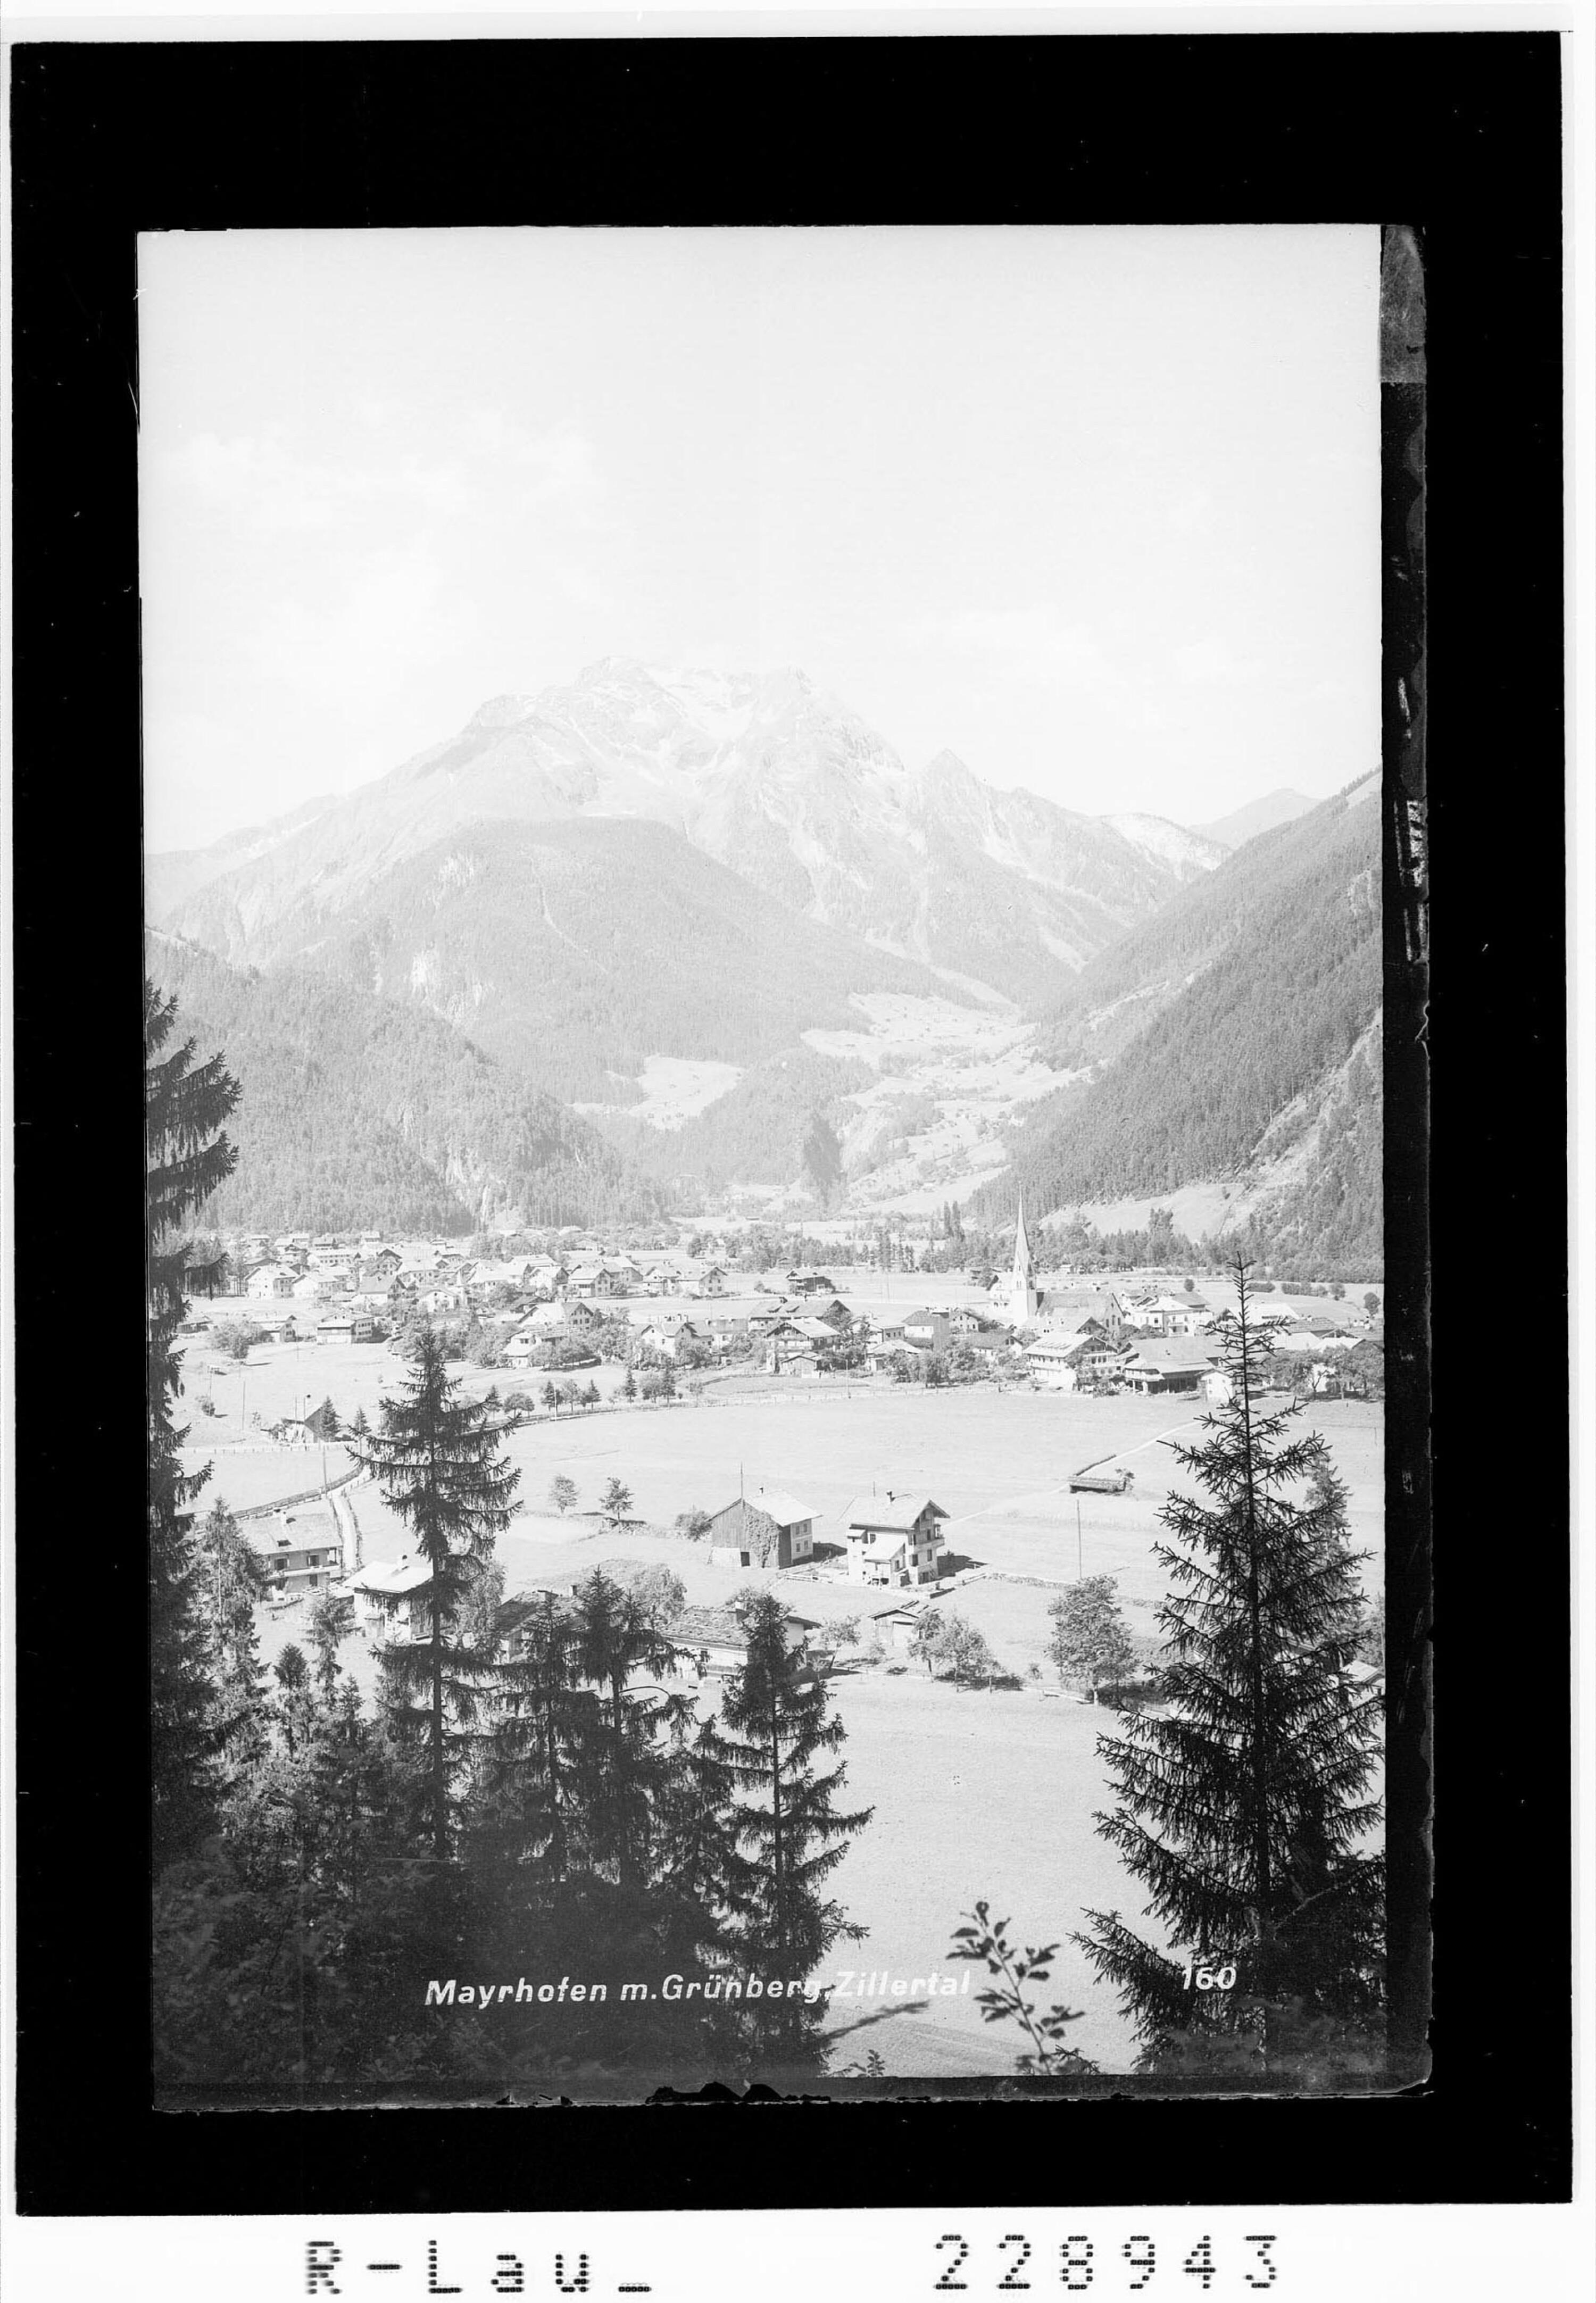 Mayrhofen mit Grünberg / Zillertal></div>


    <hr>
    <div class=